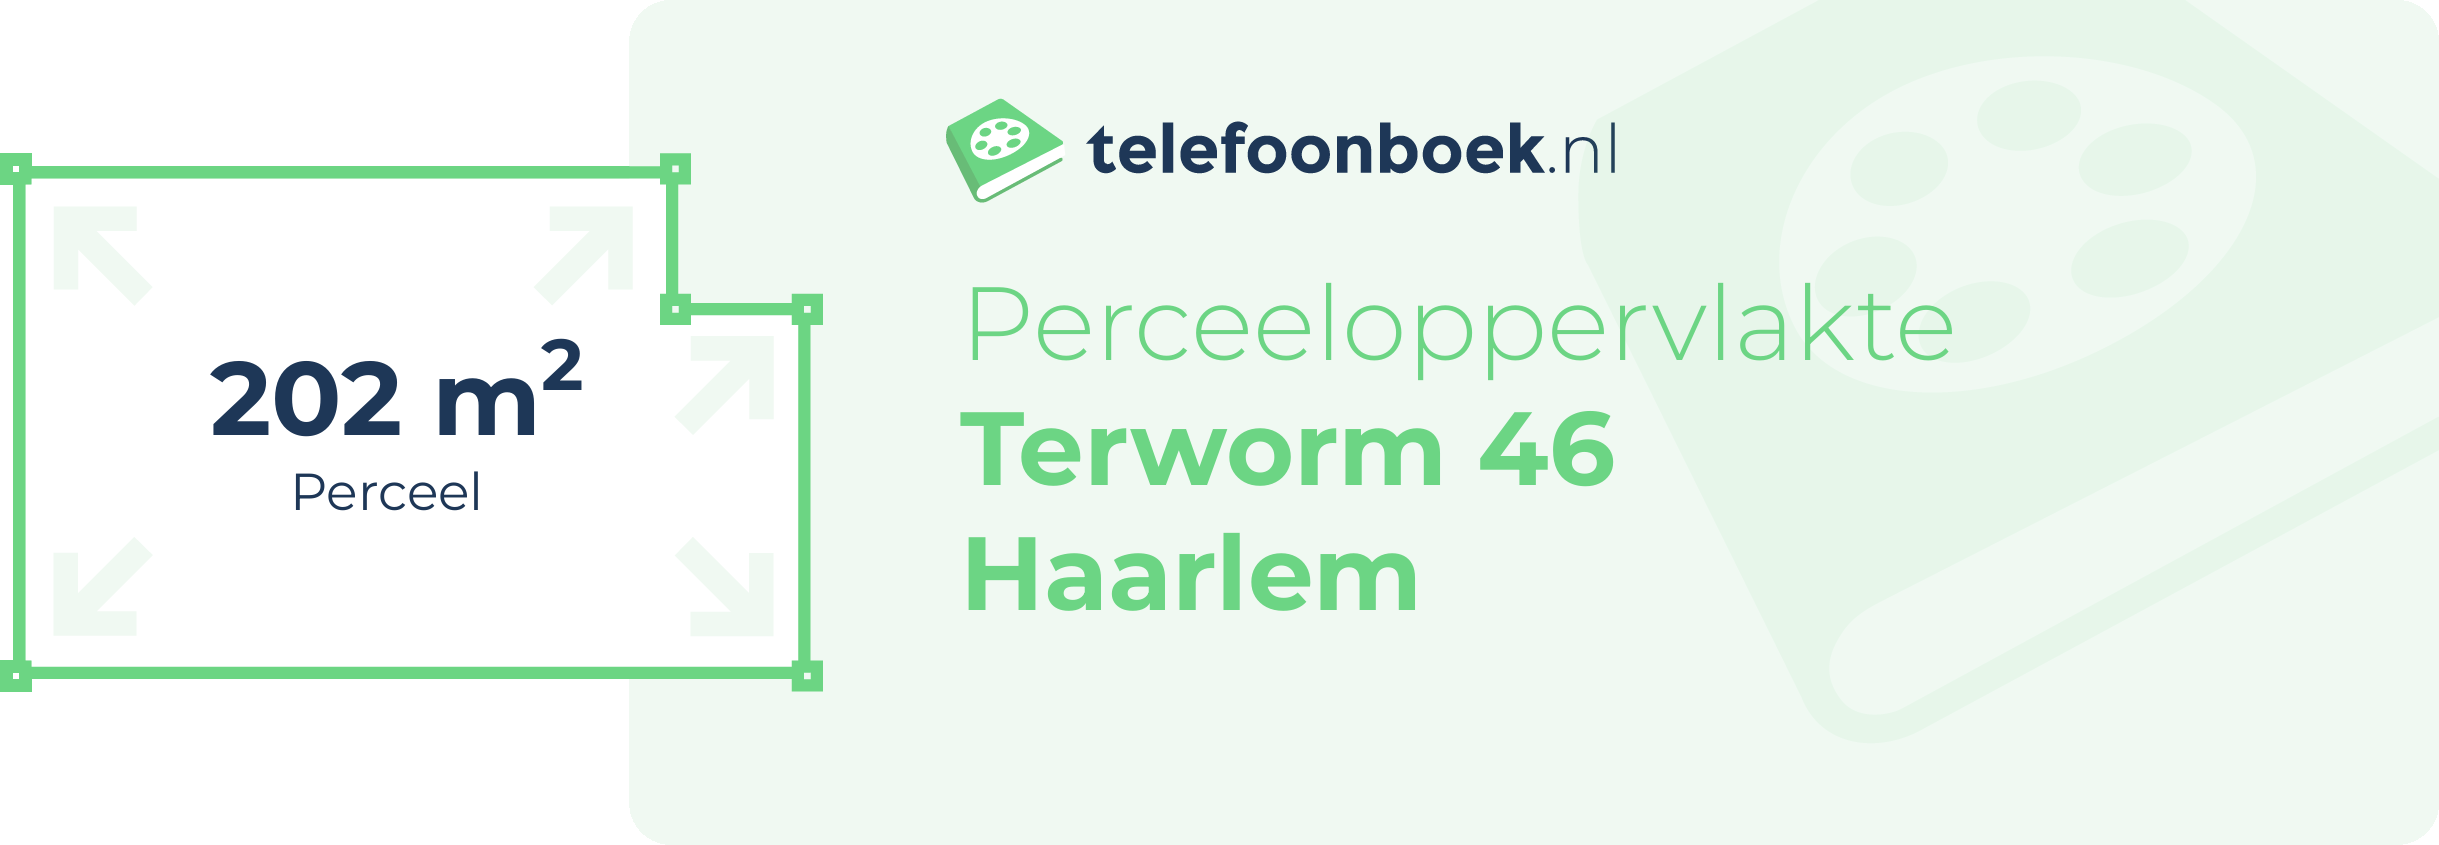 Perceeloppervlakte Terworm 46 Haarlem